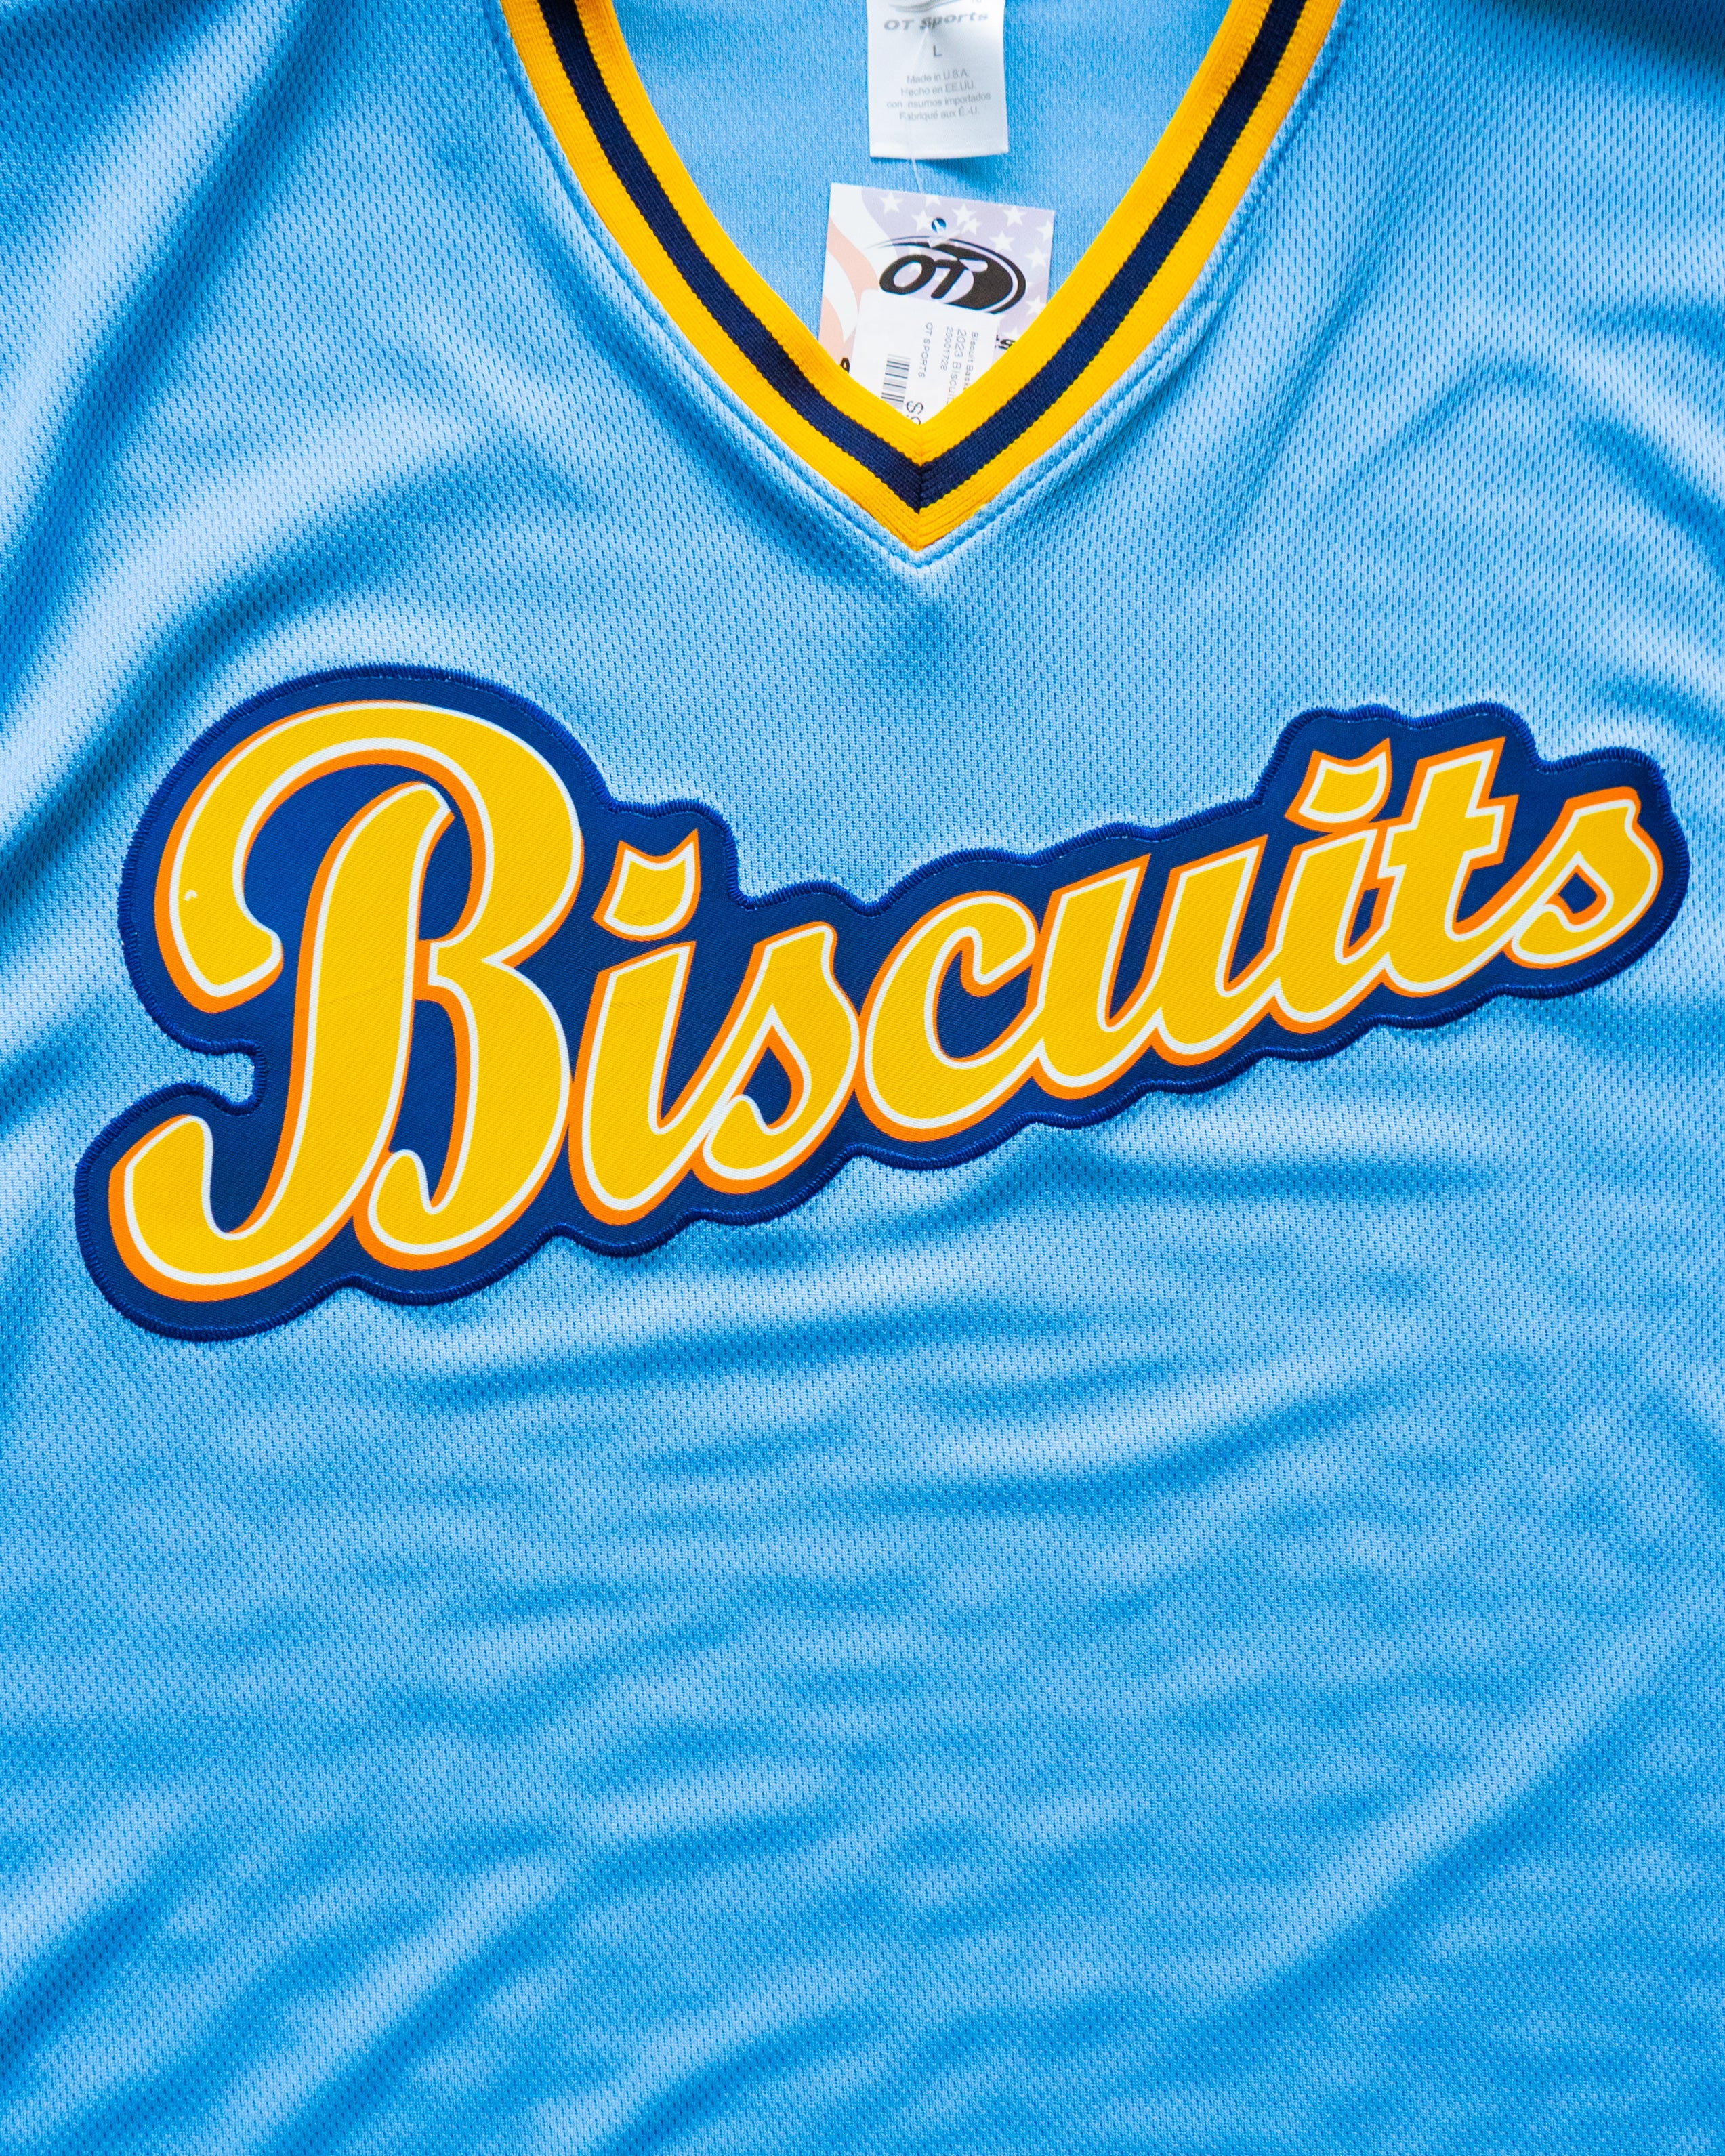 REMINDER: The Plaid Biscuits jerseys - Montgomery Biscuits